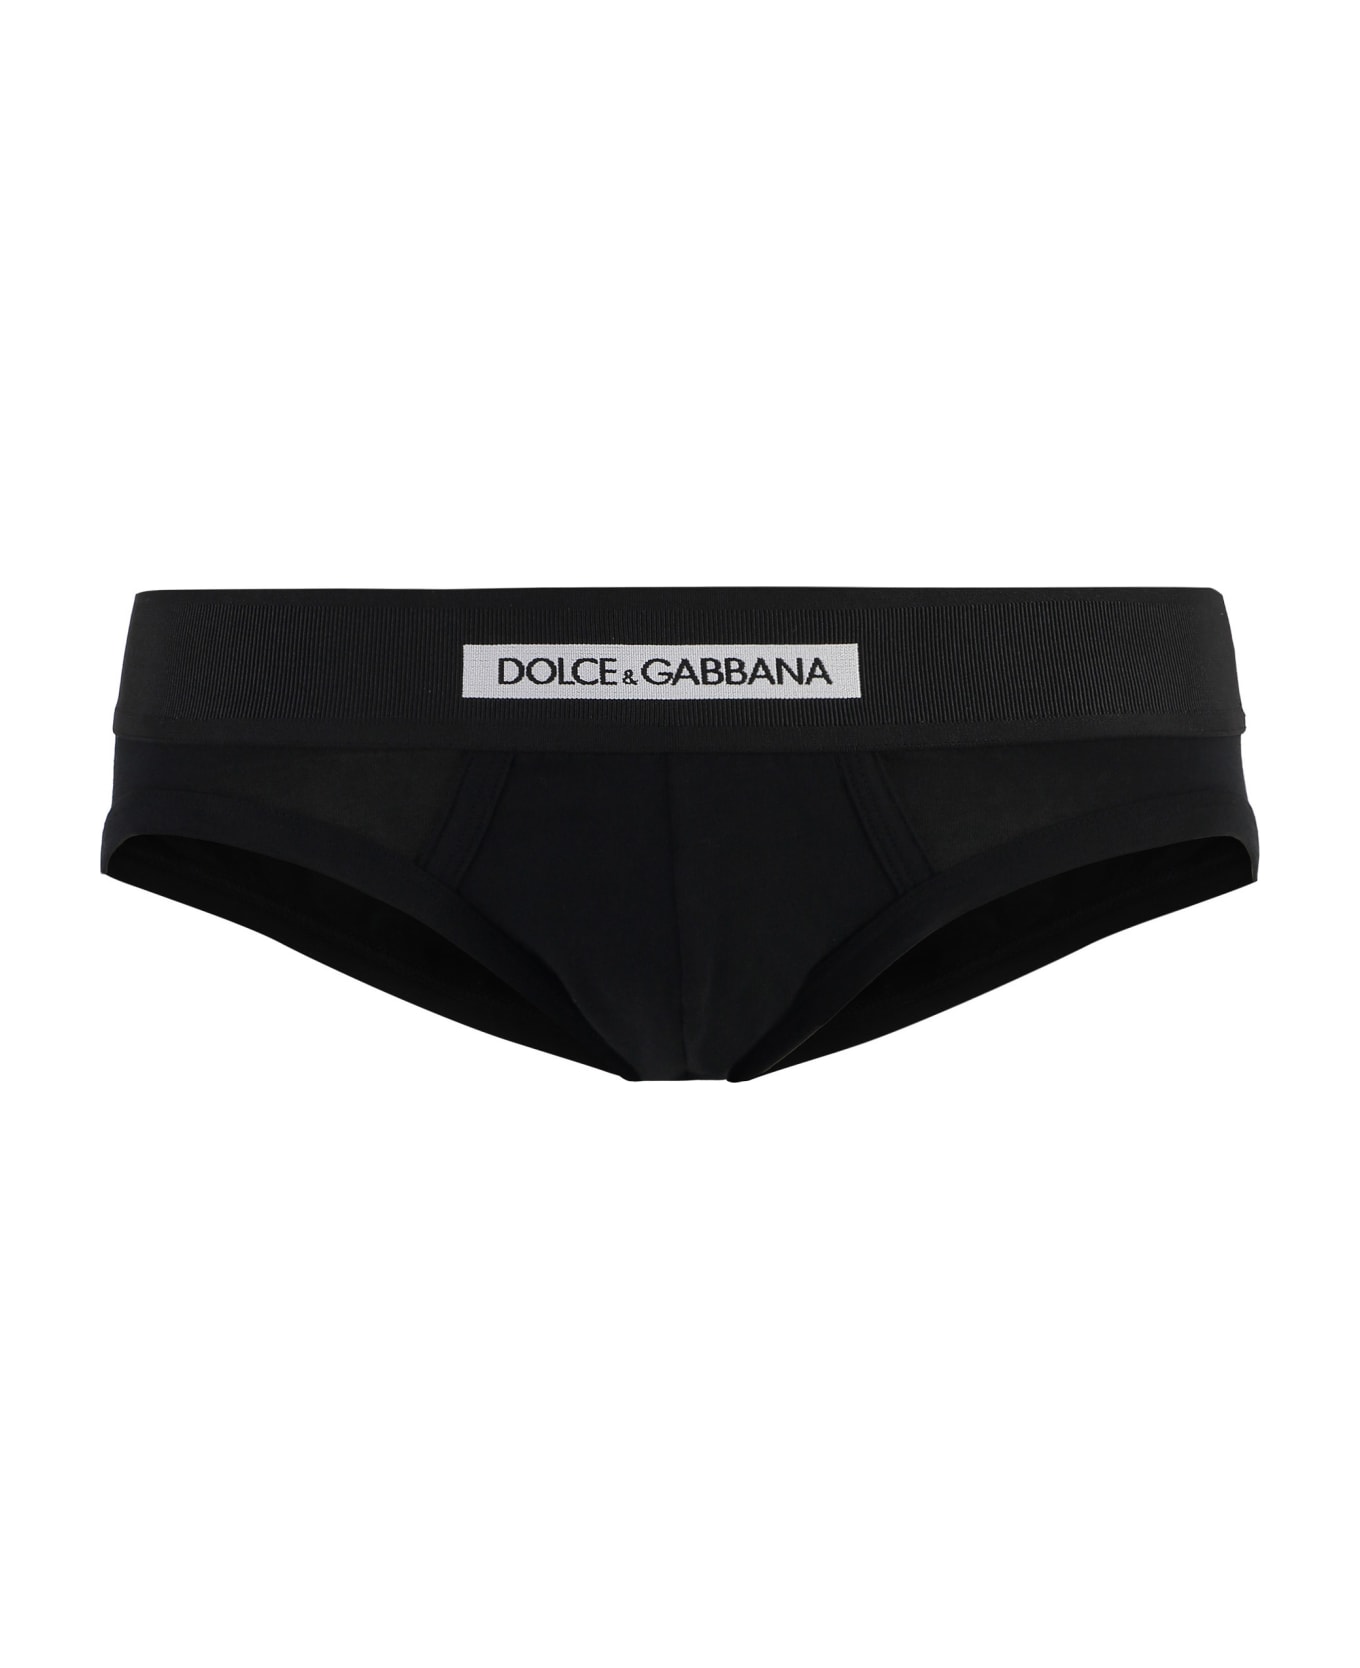 Dolce & Gabbana Plain Color Briefs - BLACK ショーツ